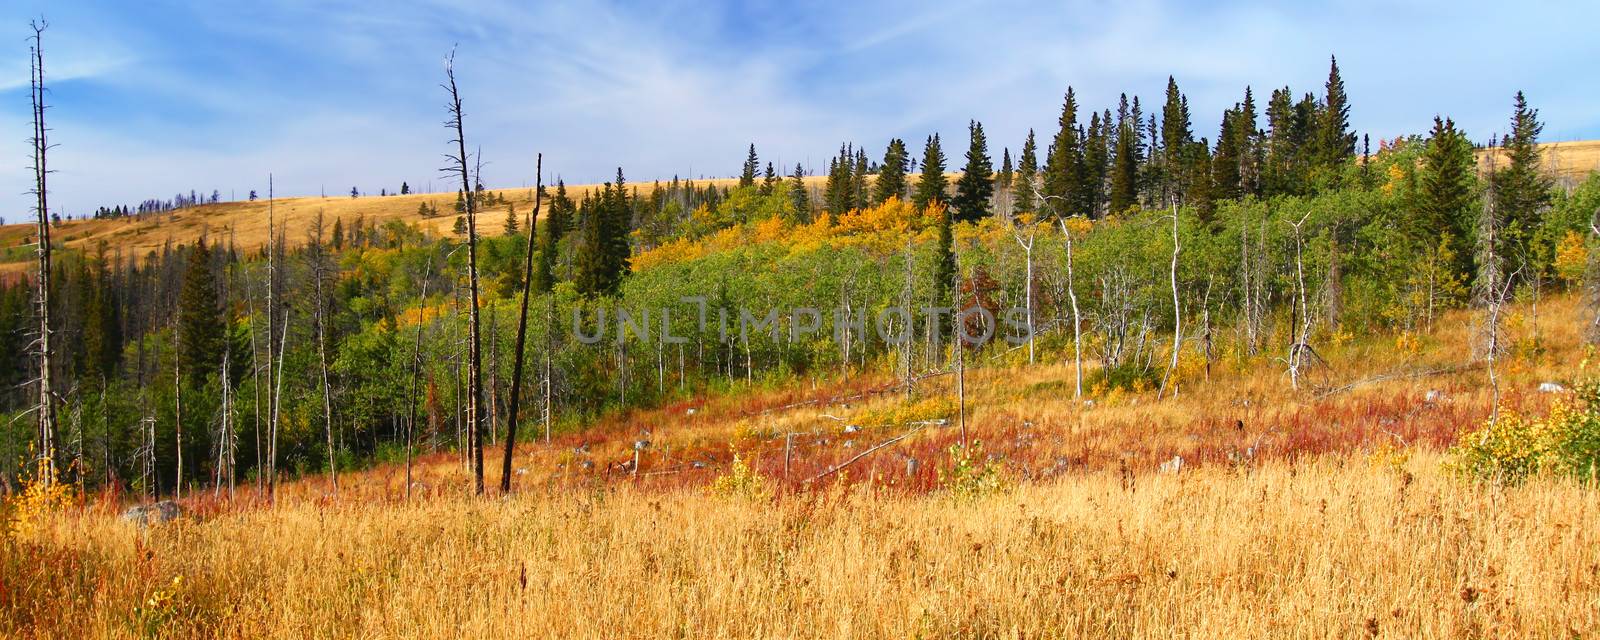 Beautiful autumn scenery of Glacier County in rural Montana.